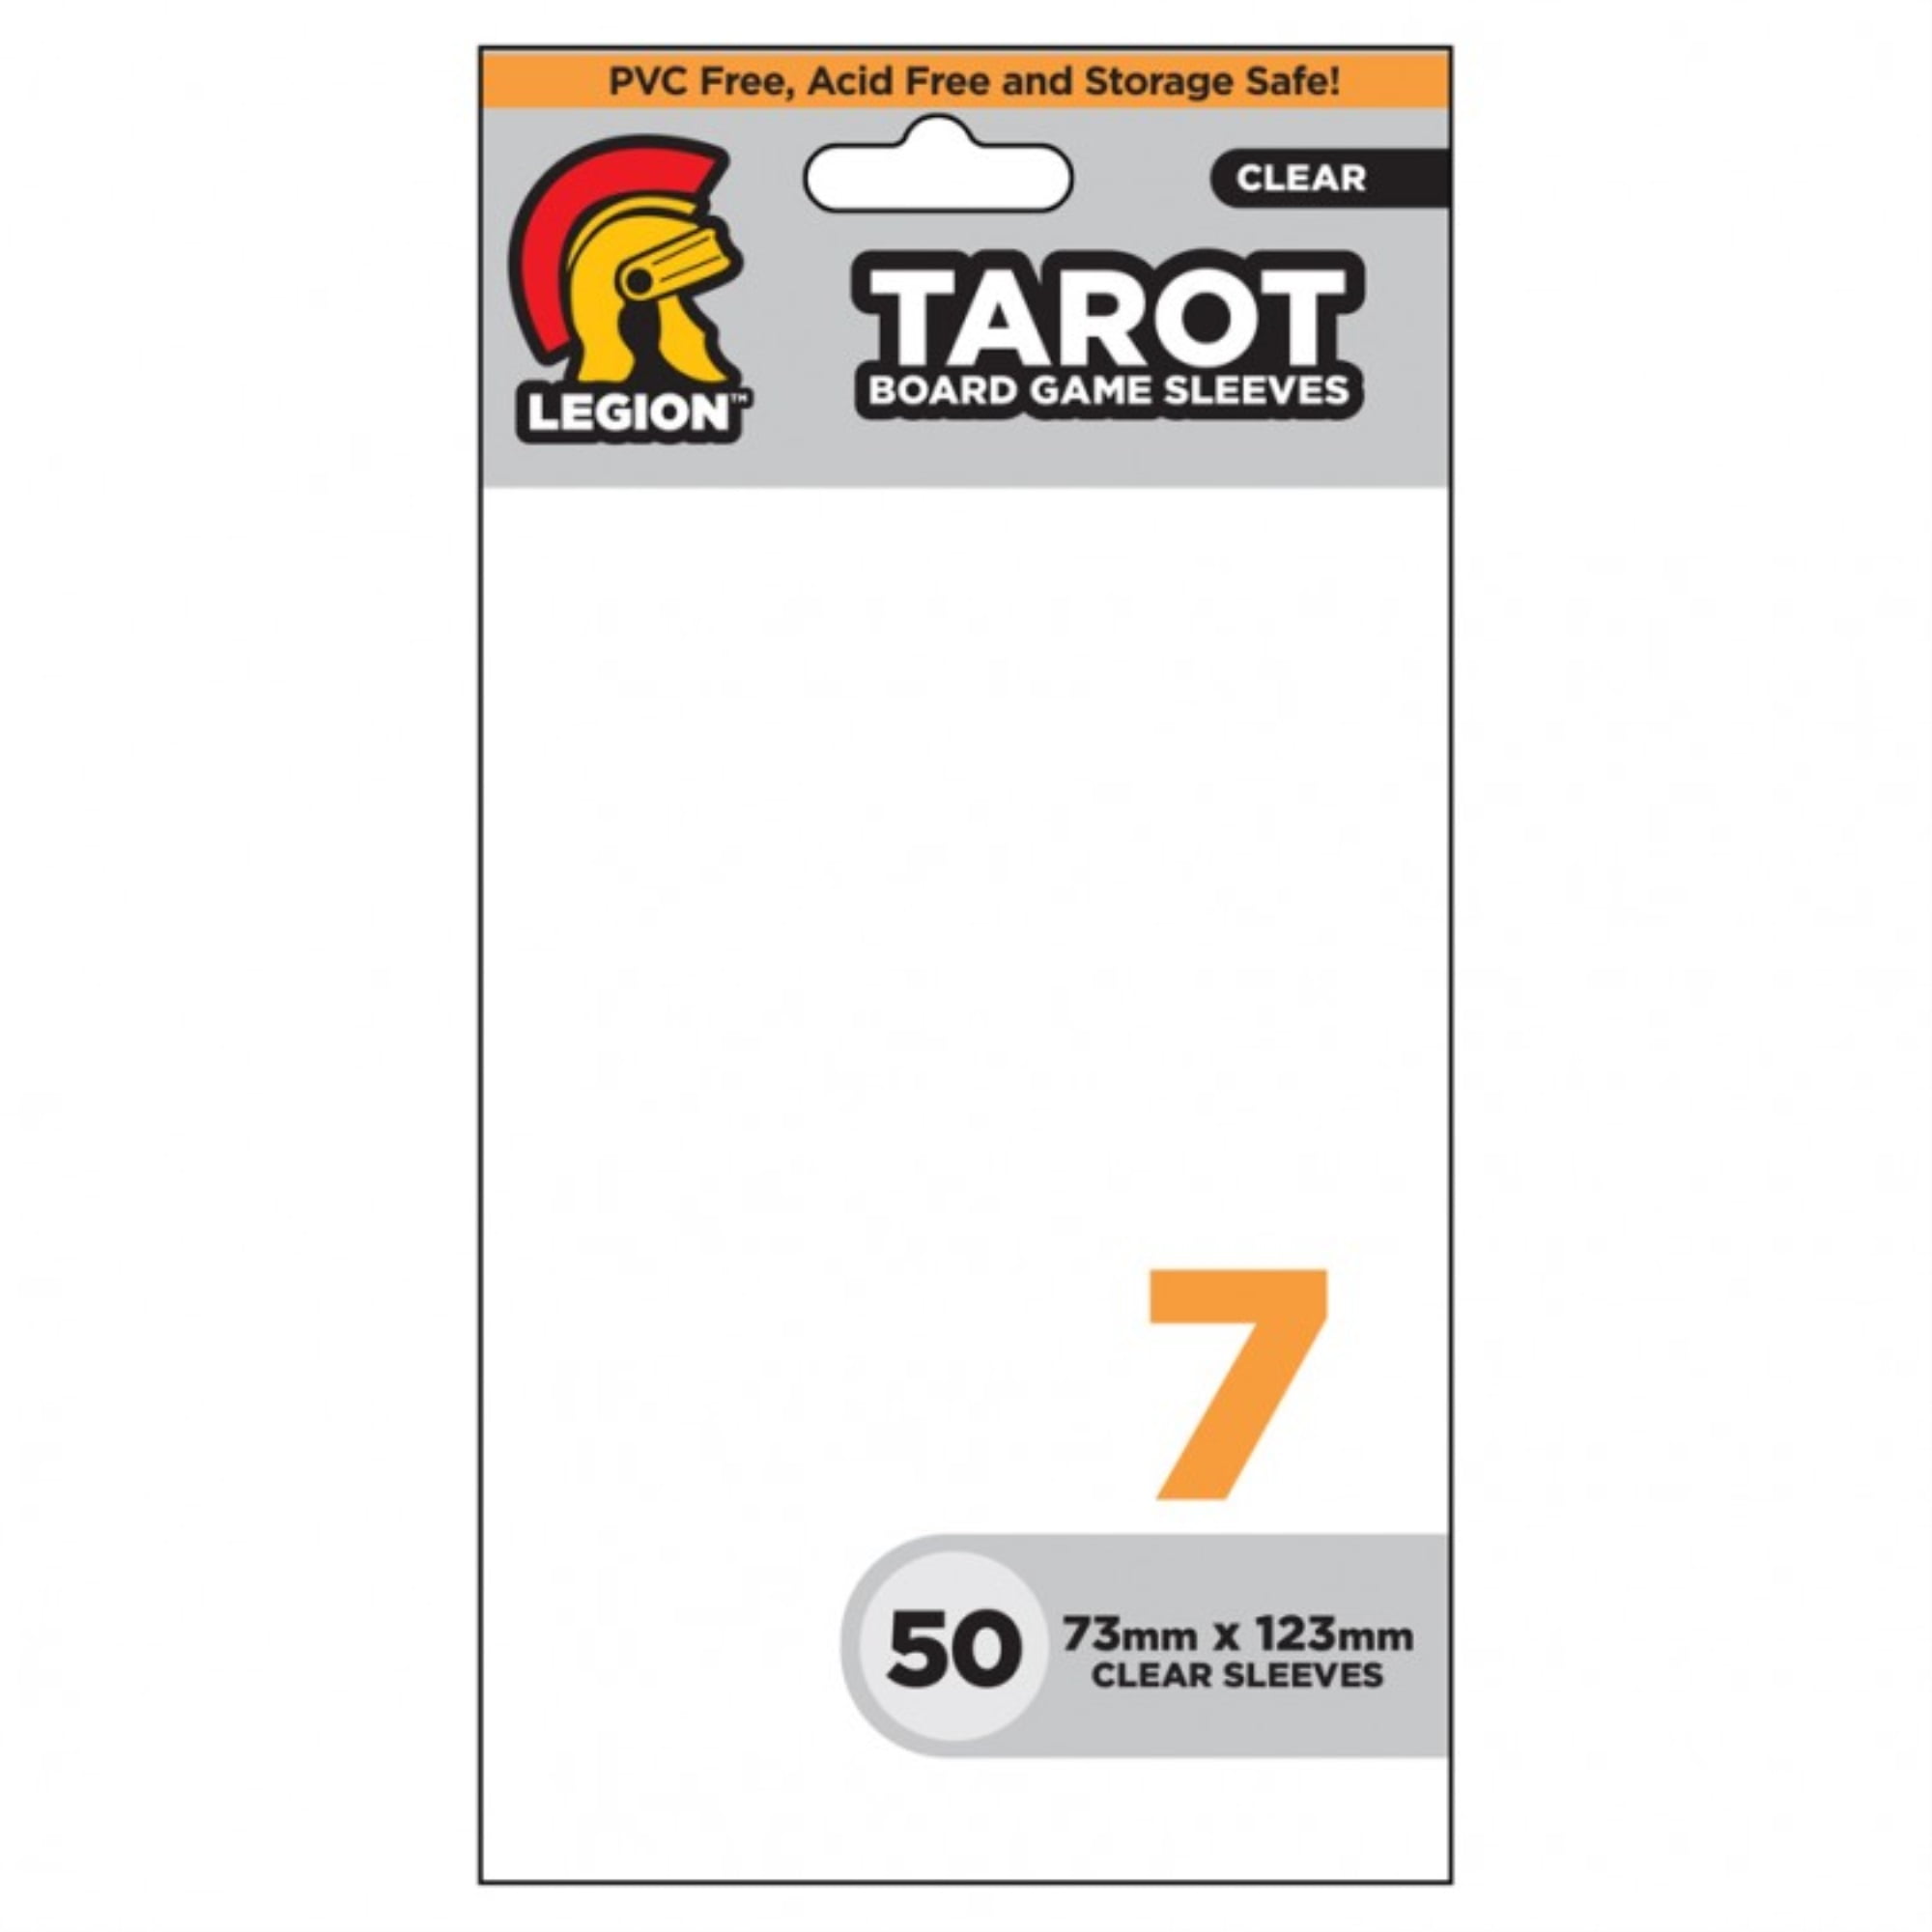 Lgnbgsta7 Legion Events Card Sleeves Board Game Sleeves Tarot, Pack Of 50